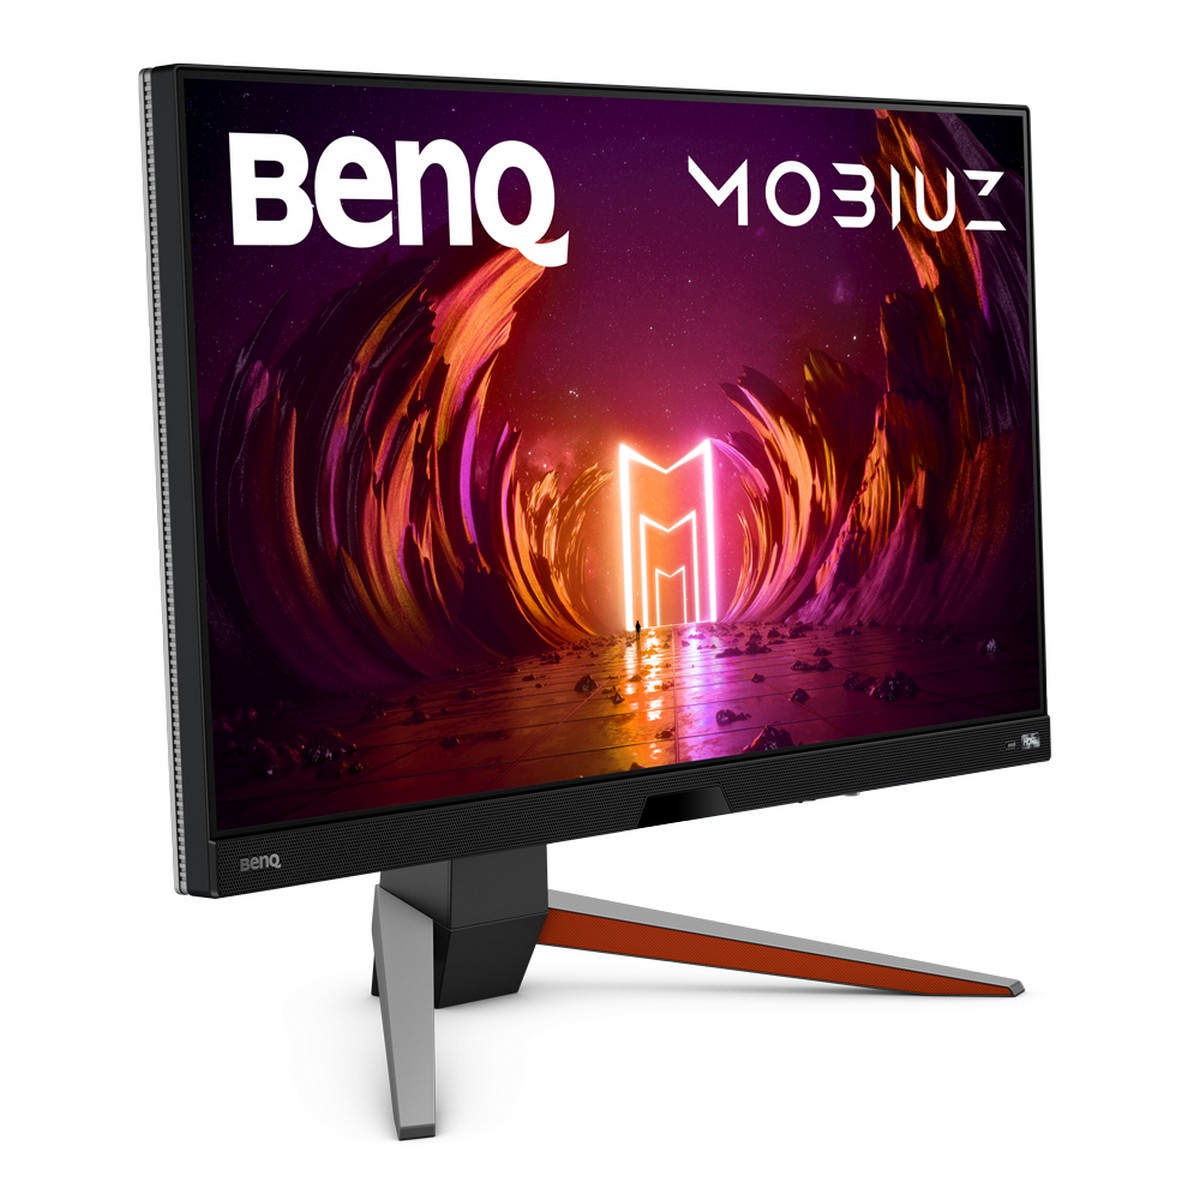 BenQ 27" MOBIUZ EX270QM 2560x1440 IPS 240Hz 1ms FreeSync HDR600 Widescreen Gaming Monitor 